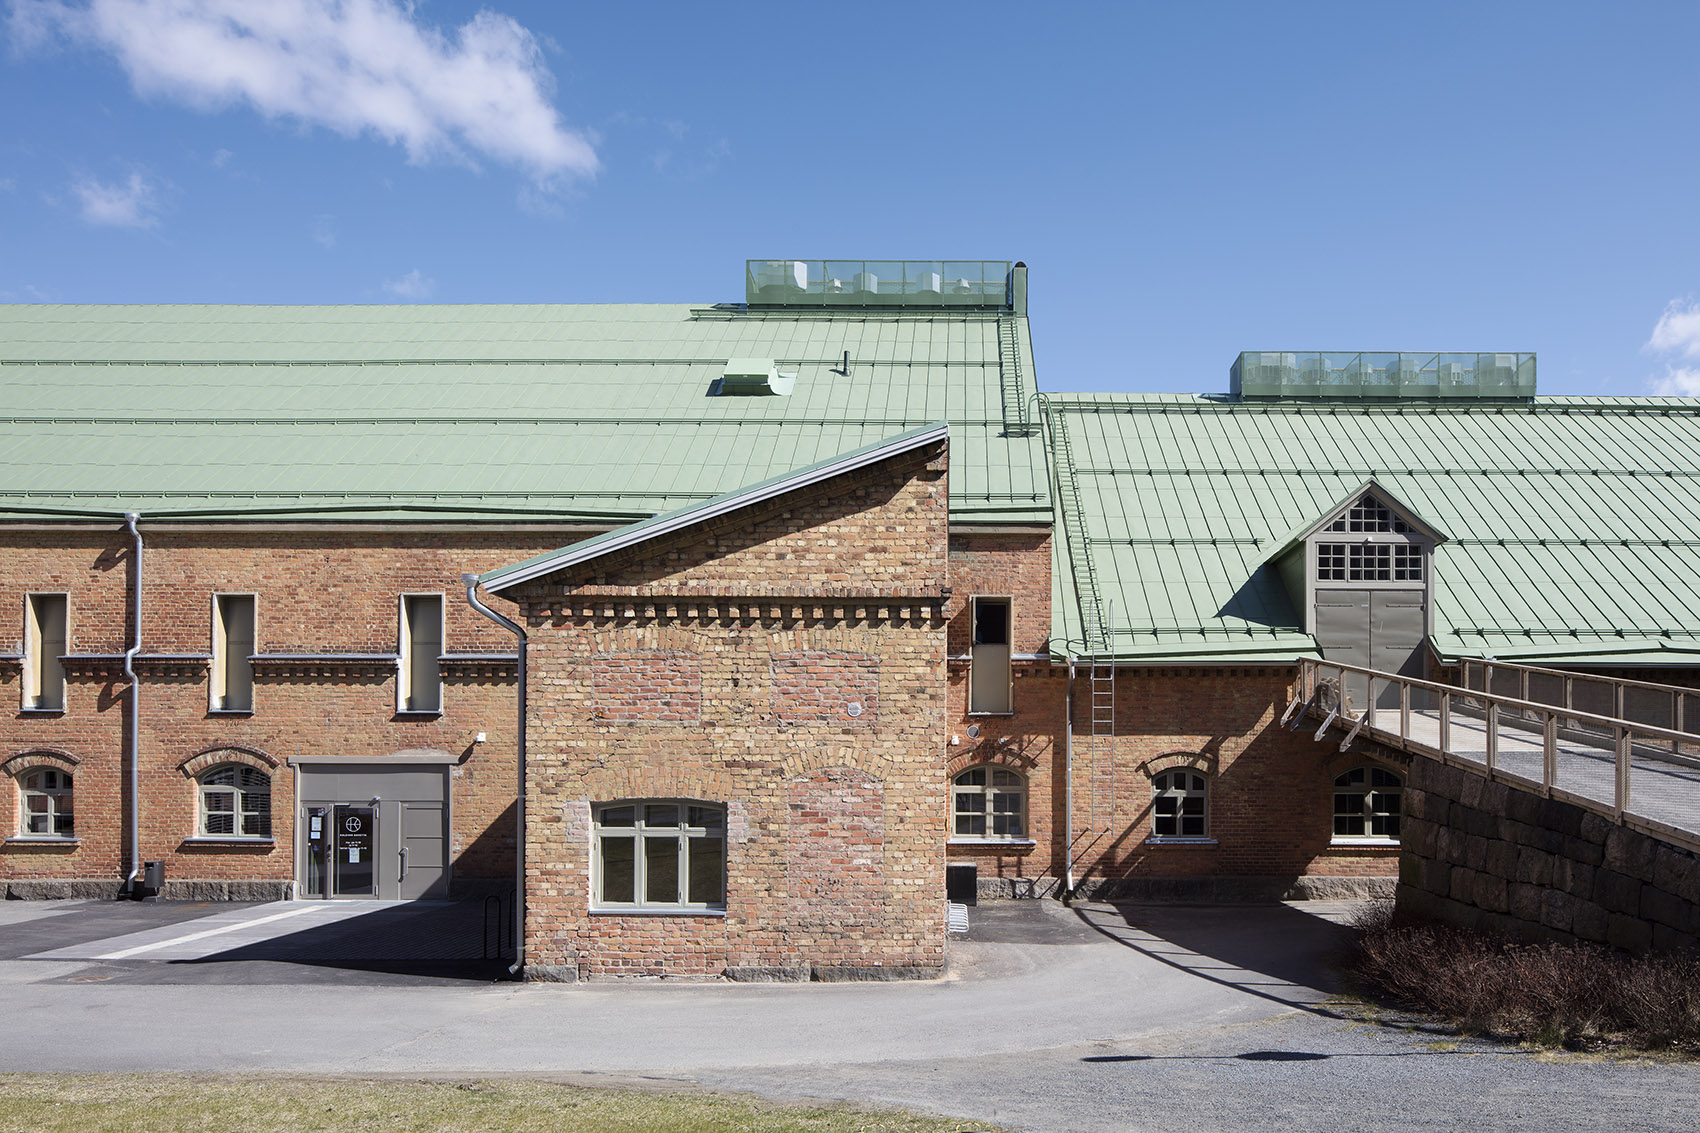 Kalevan Navetta文化艺术中心，芬兰/材料与结构的交响曲-7